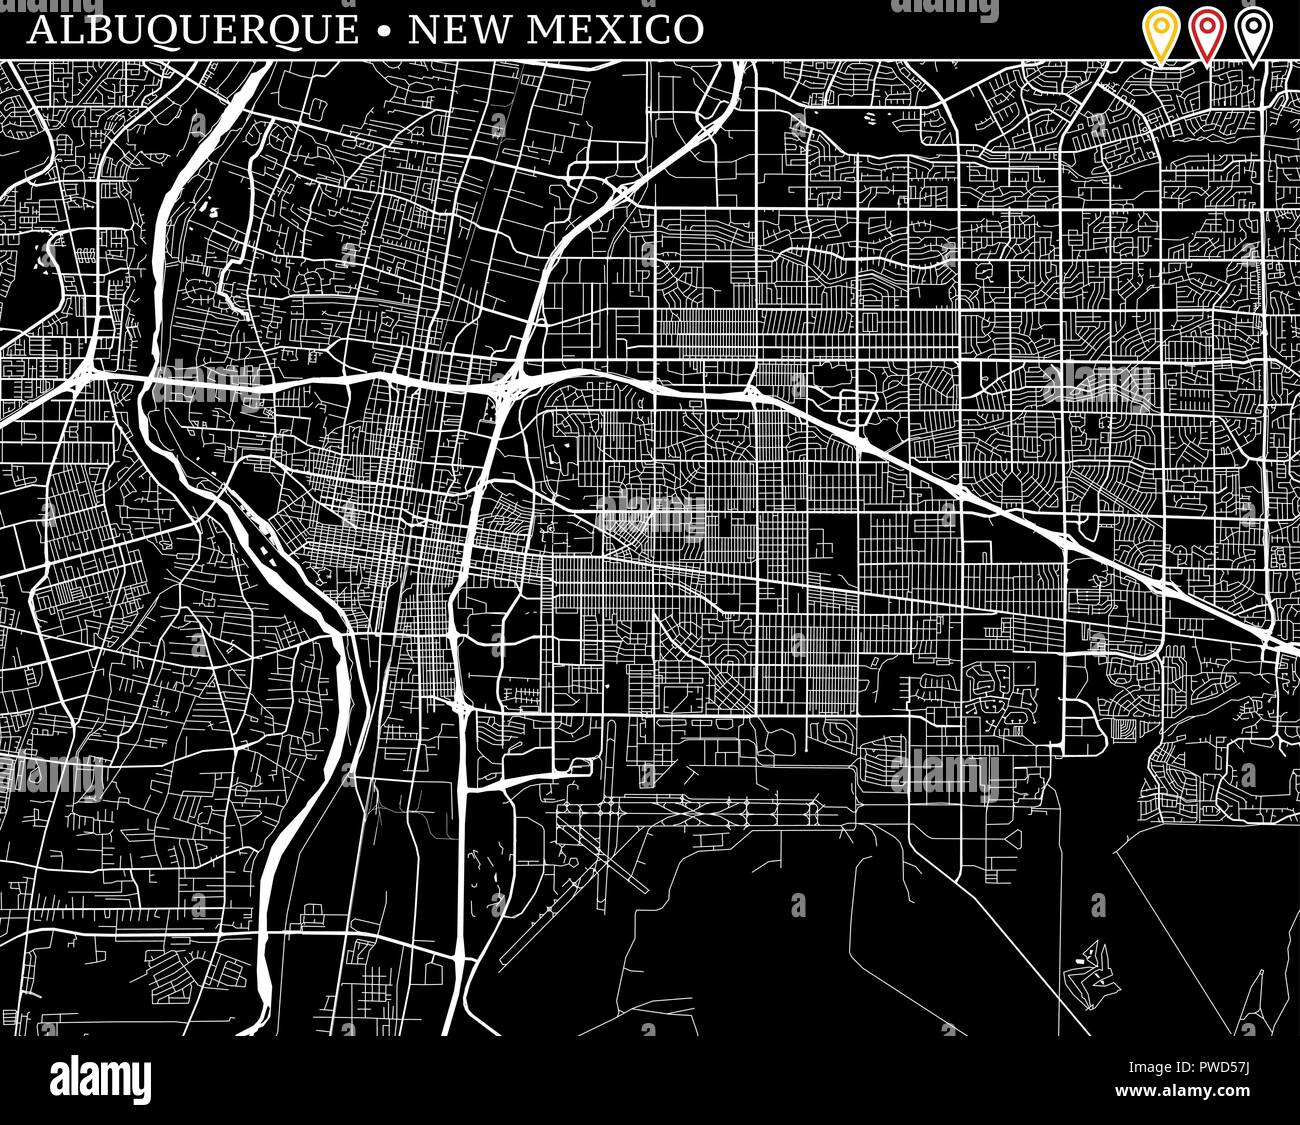 street map of albuquerque new mexico Simple Map Of Albuquerque New Mexico Usa Black And White street map of albuquerque new mexico